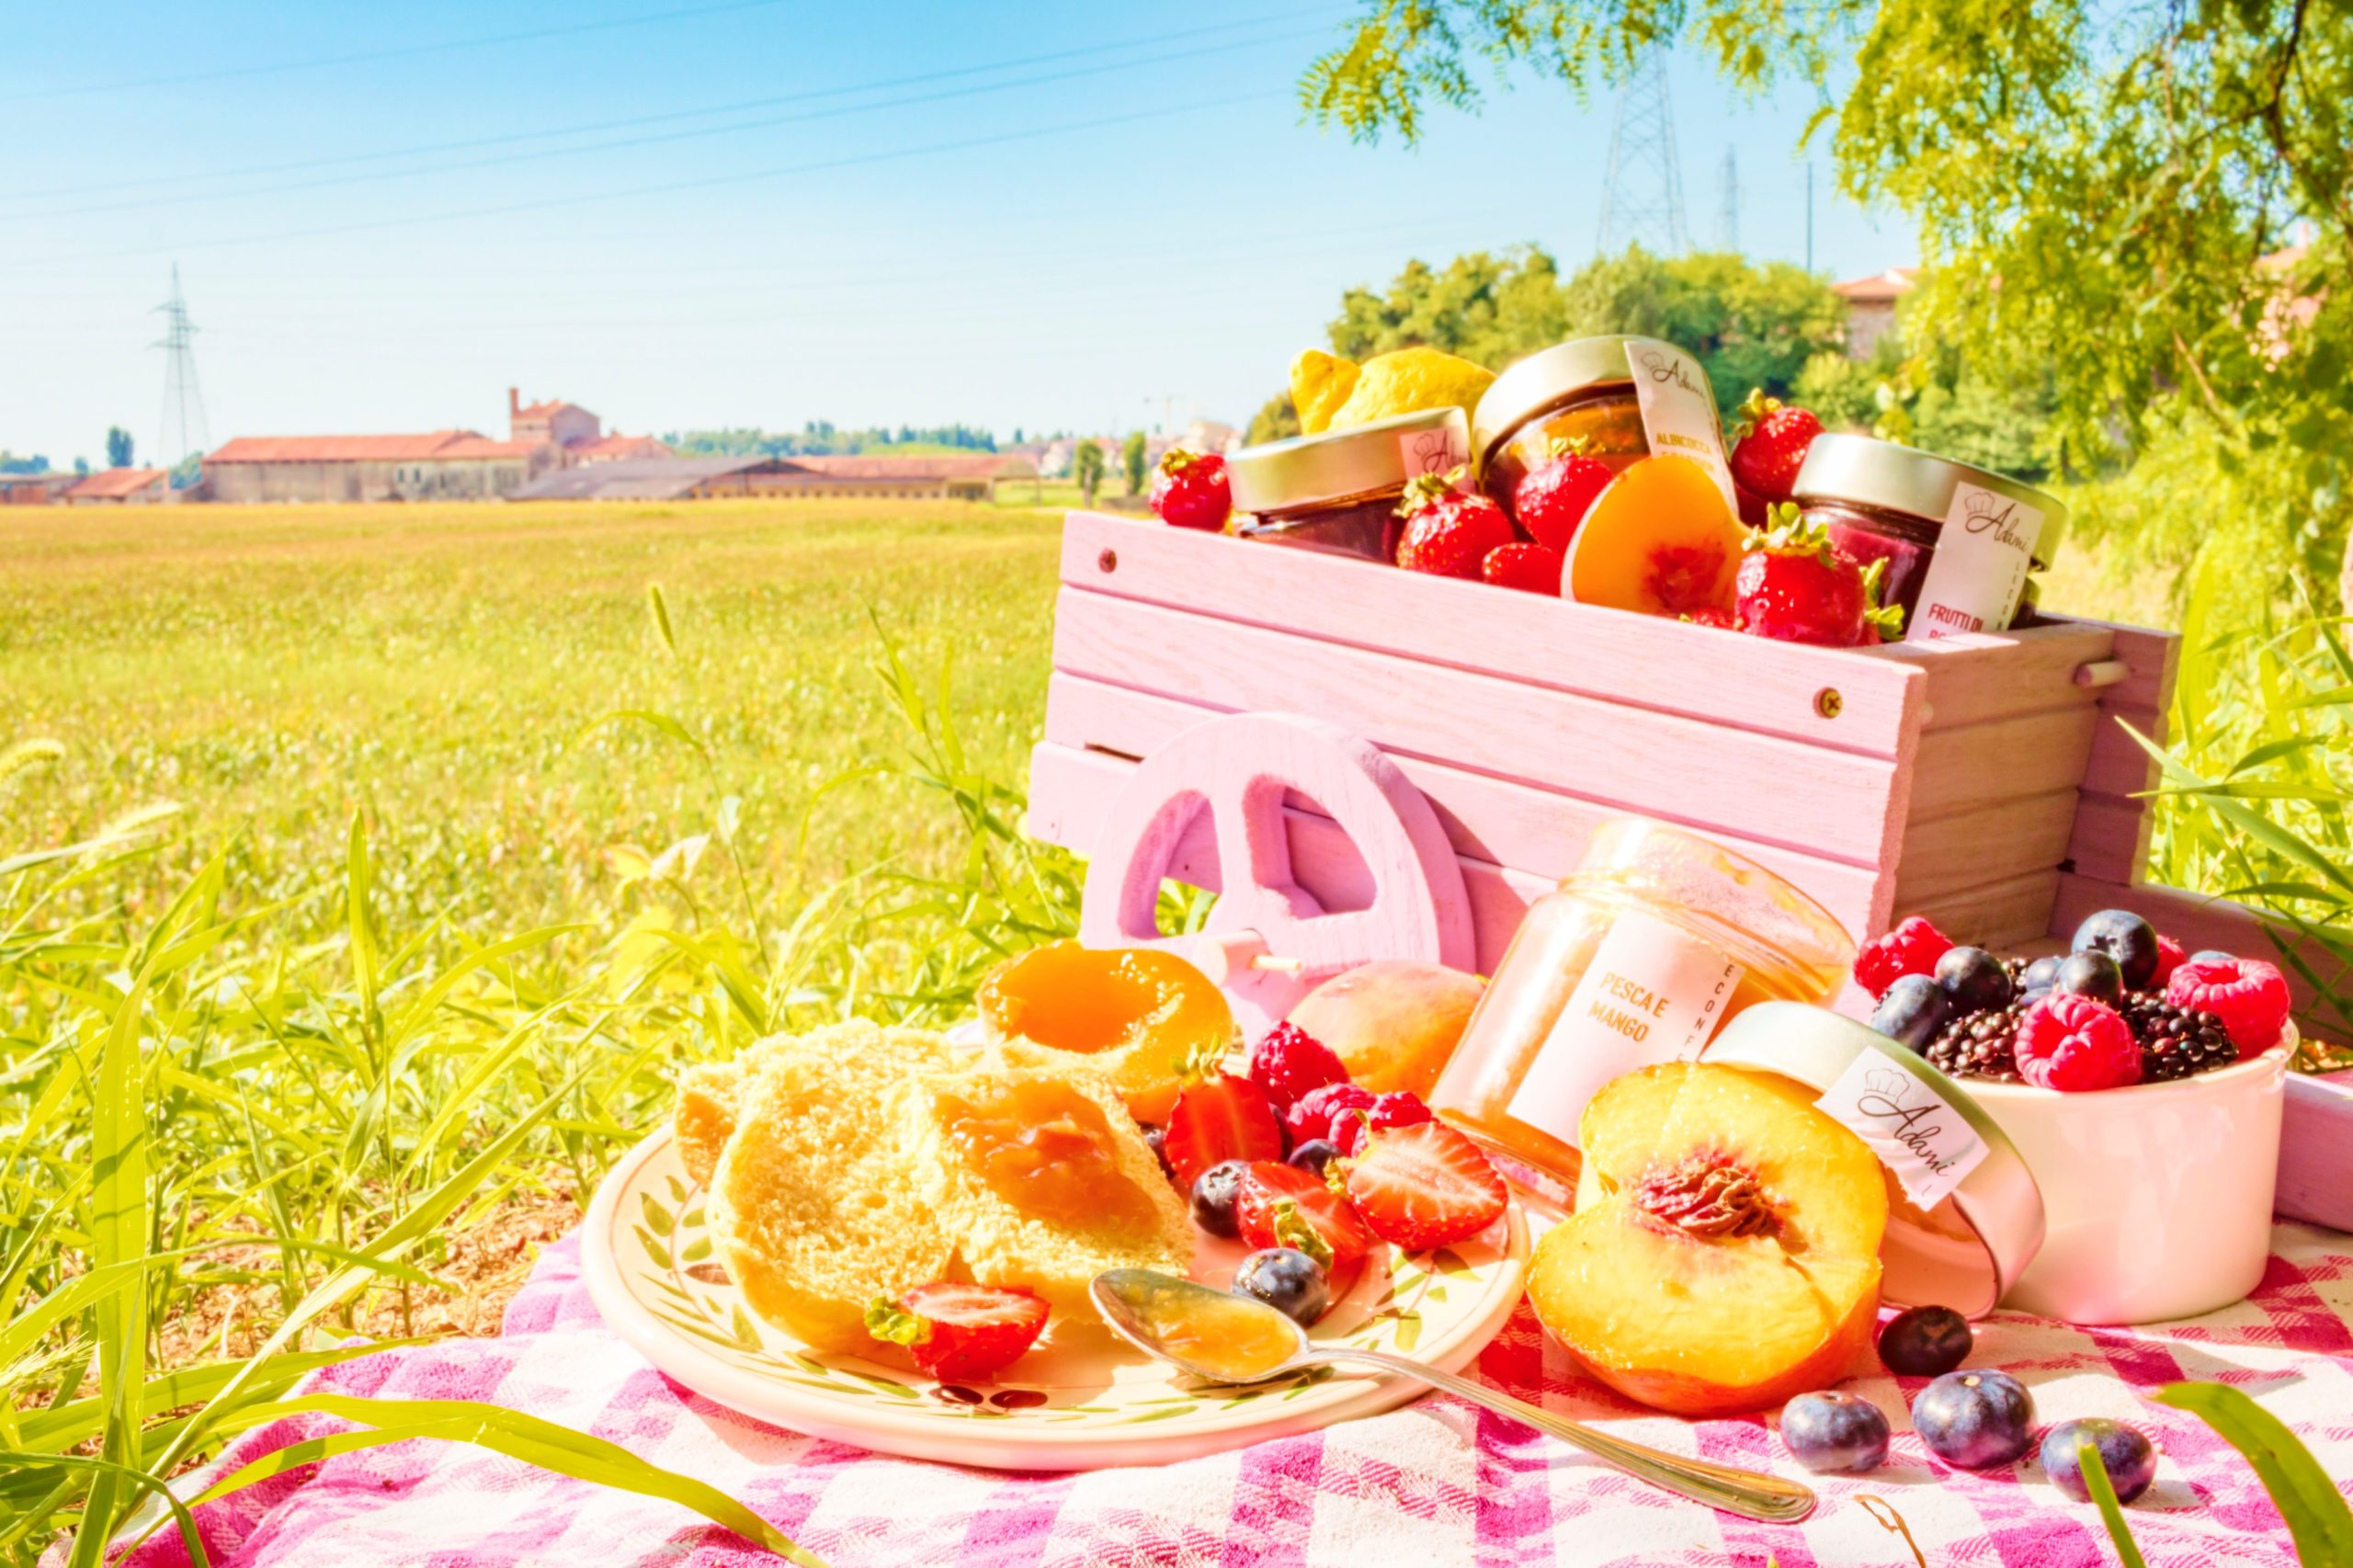 <img src="fresh.jpg" alt="fresh fruit picnic on a farm"/> 